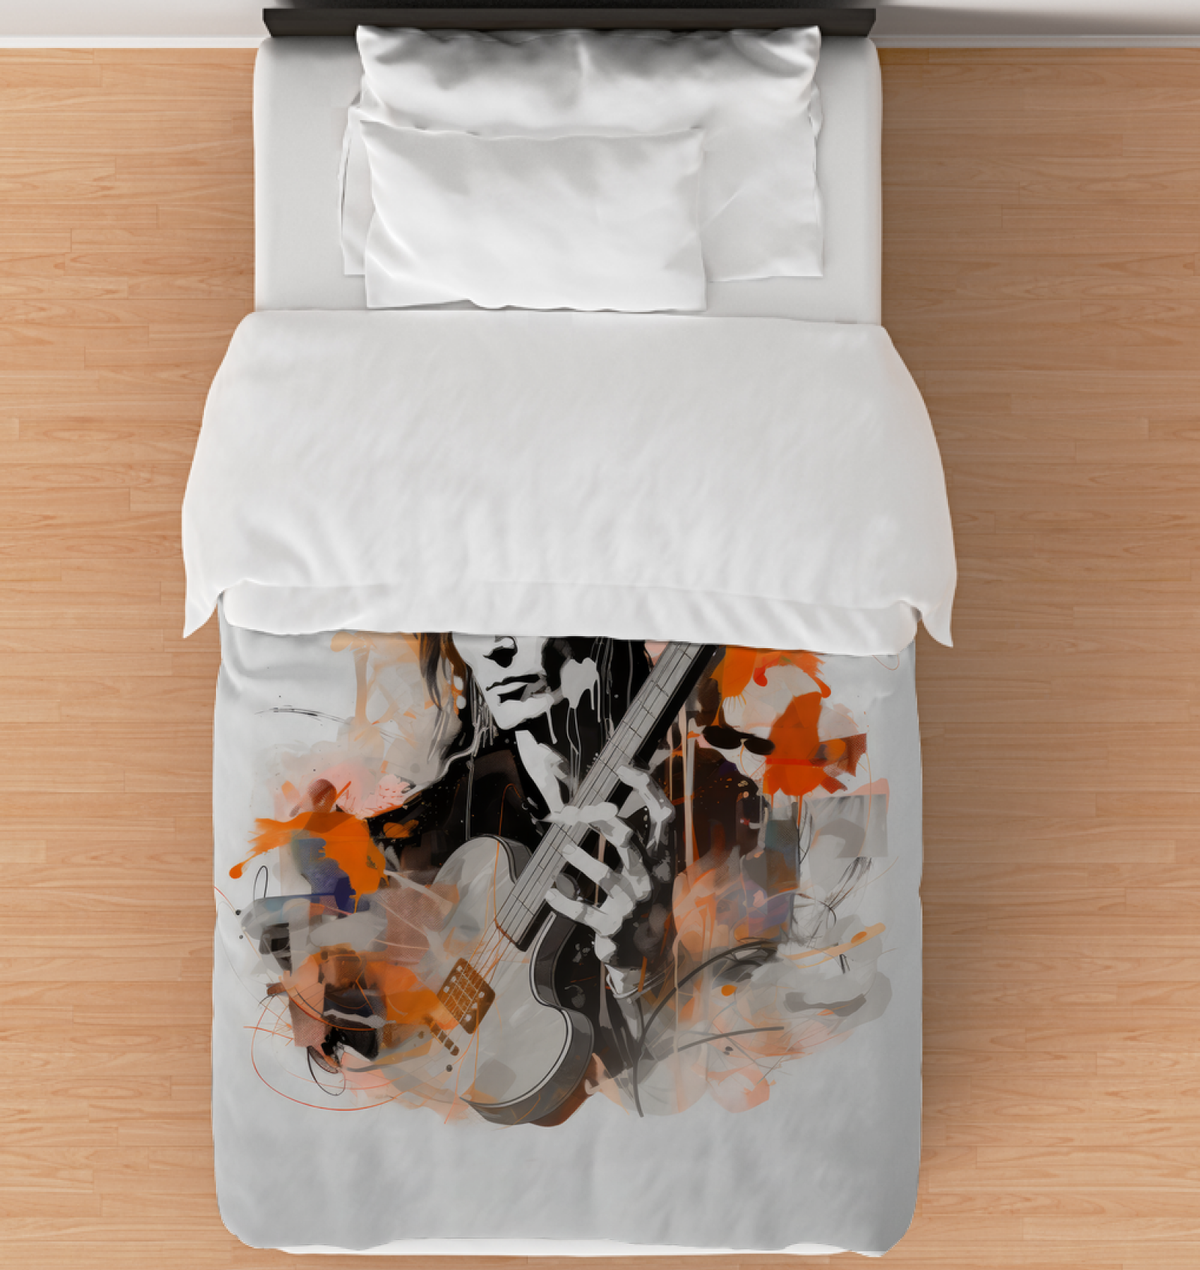 Organic Shapes Comforter - Bedding.